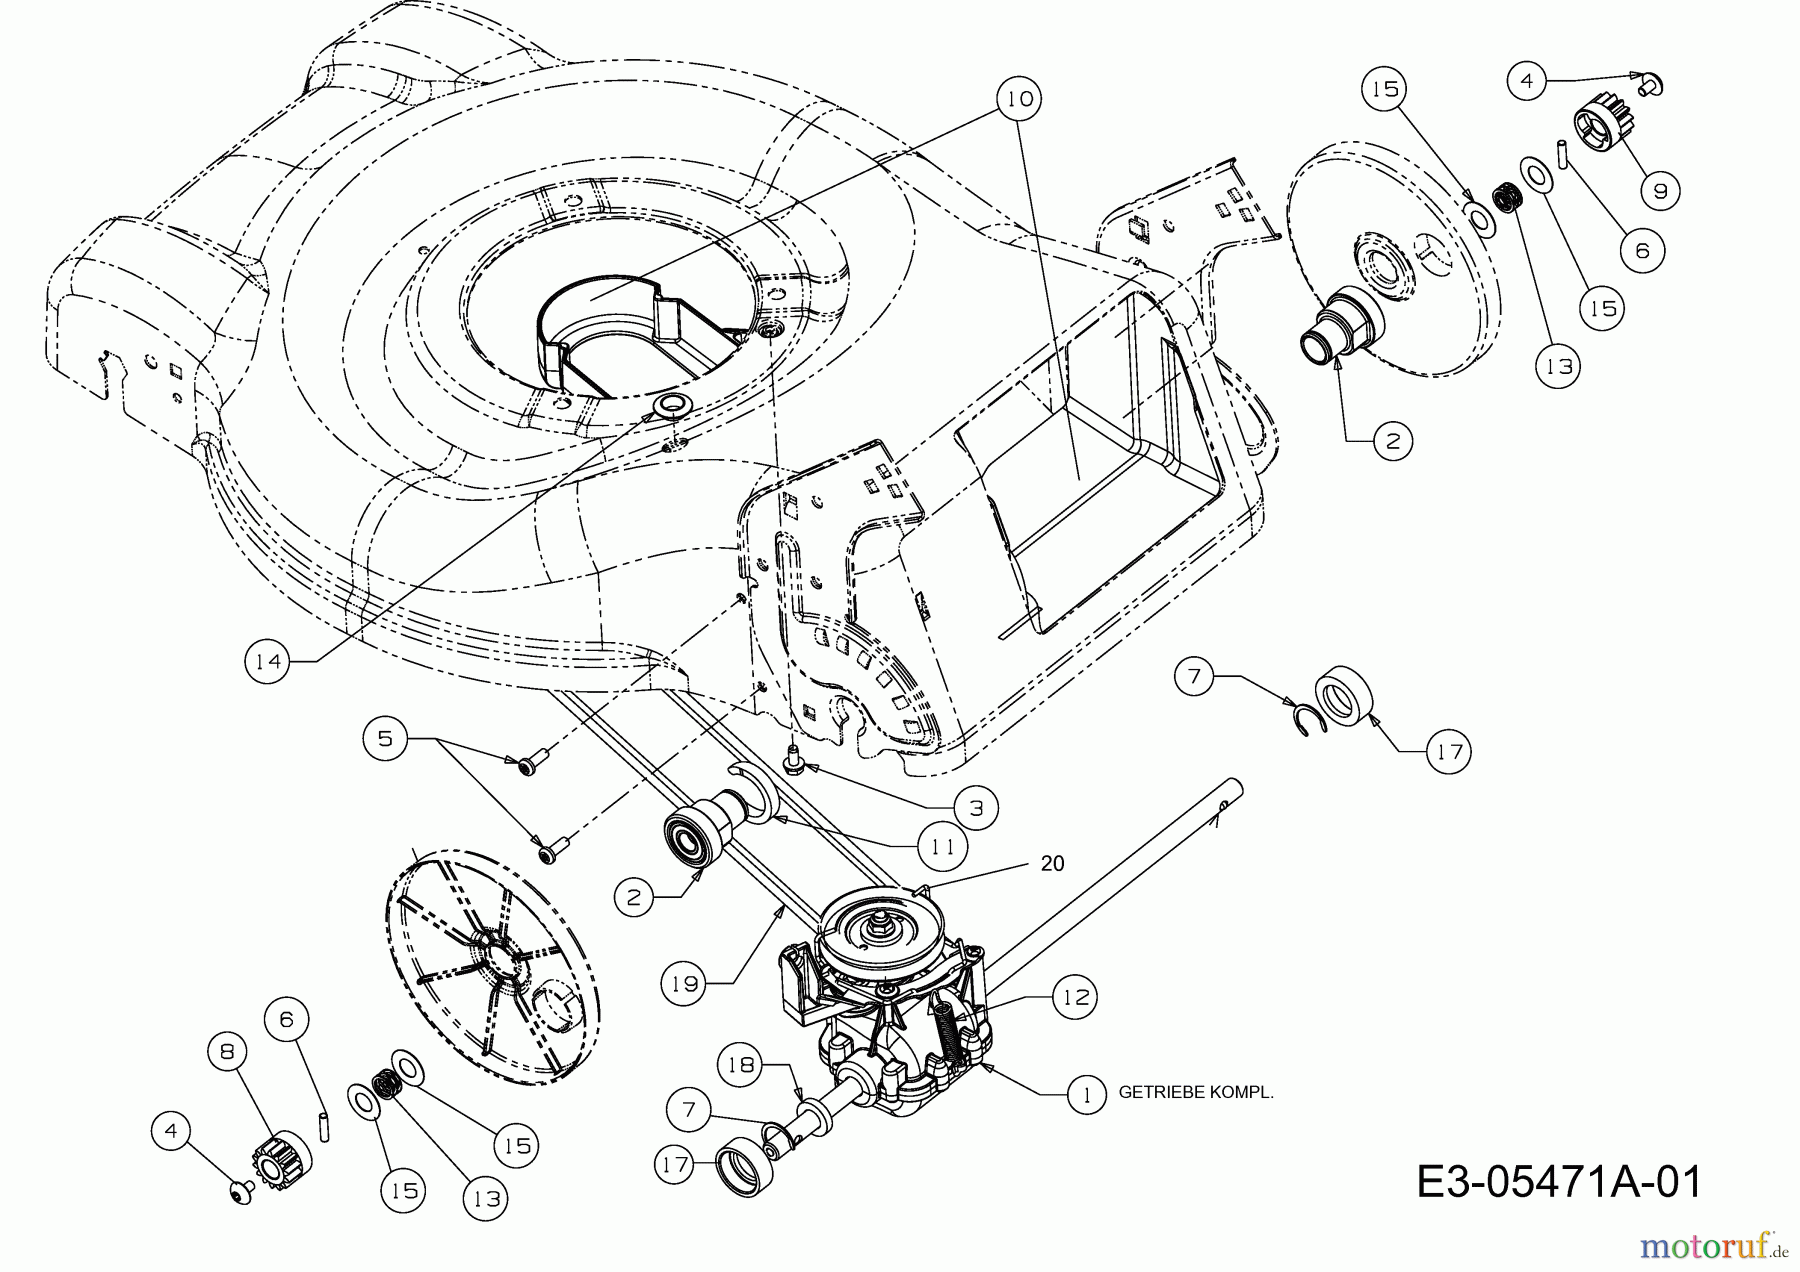  MTD Motormäher mit Antrieb 46 SPOE 12EEJ5M4600  (2010) Getriebe